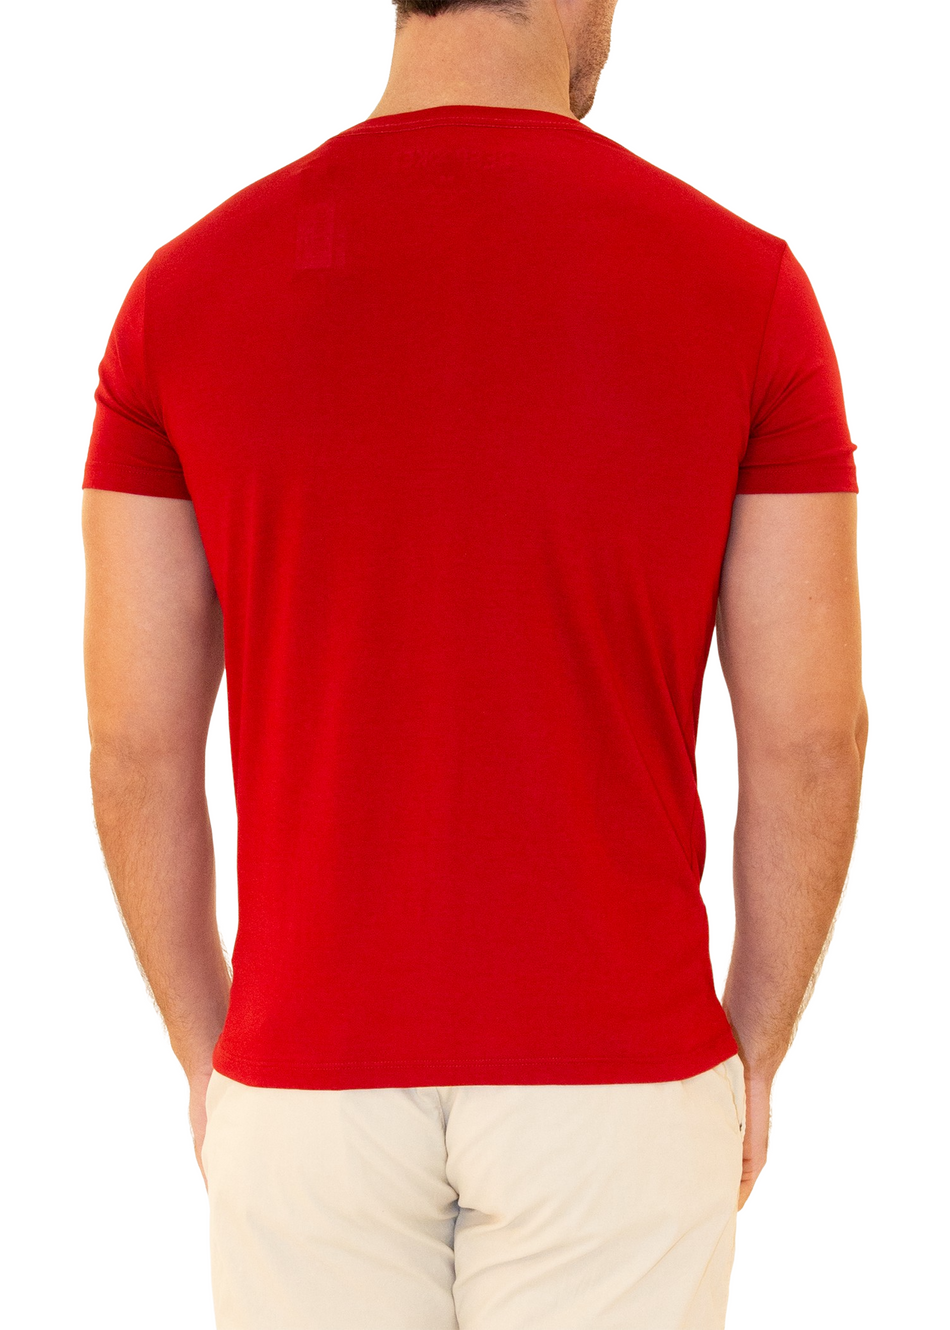 Men's Essentials Cotton V-Neck Solid Red